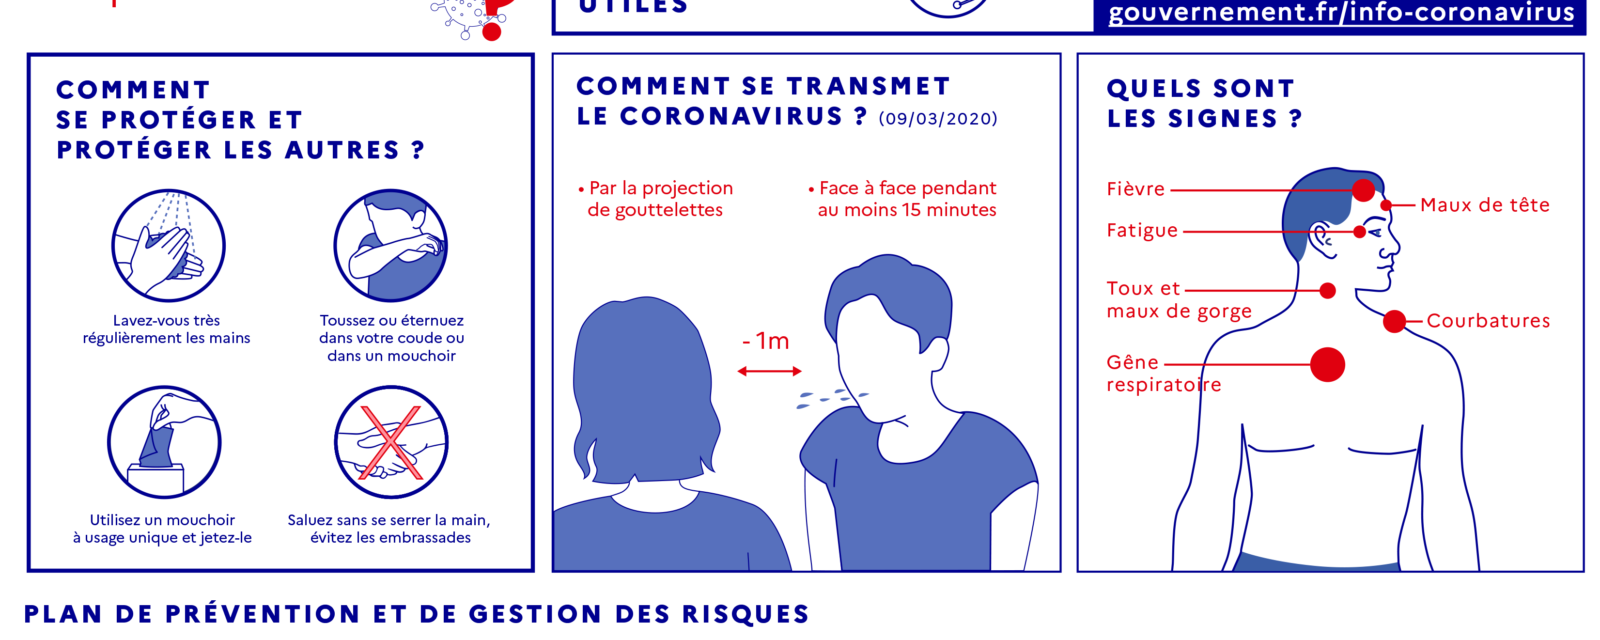 coronavirus-covid-19-rappel-des-consignes-sanitaires-2-1600x640